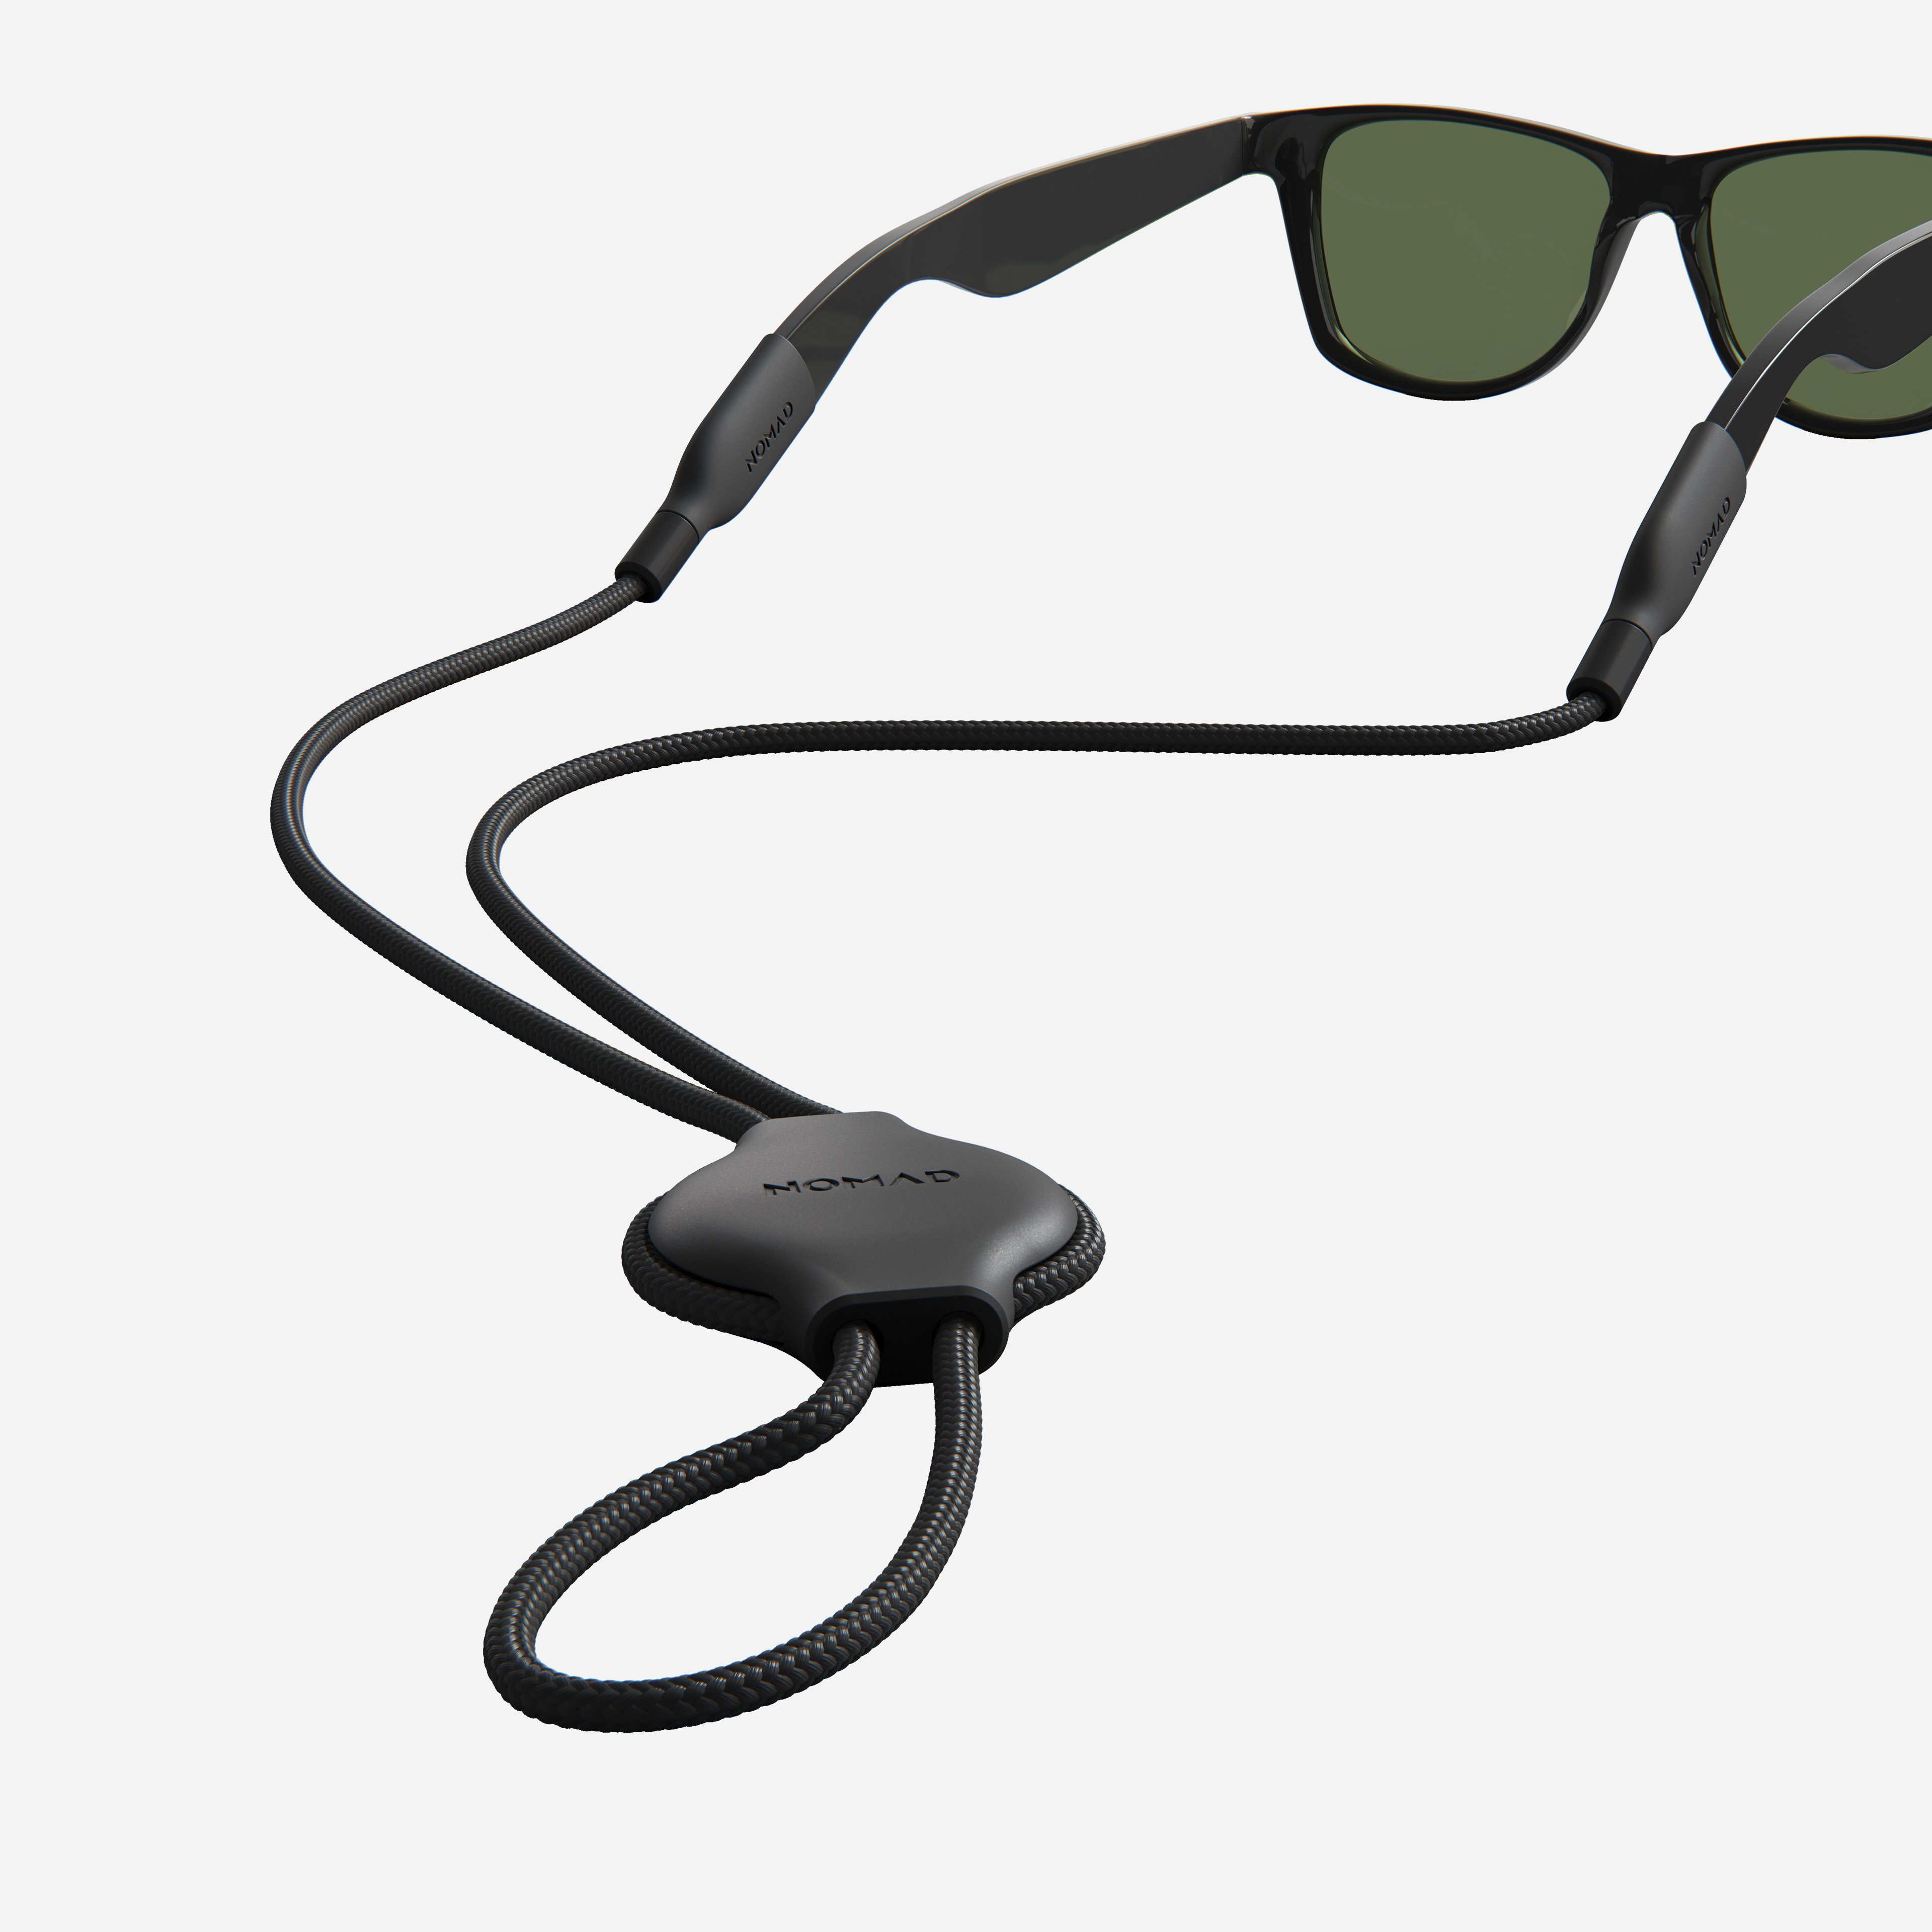 Nylon Sunglasses Lanyards Sunglasses Straps Sports Safety Color Random